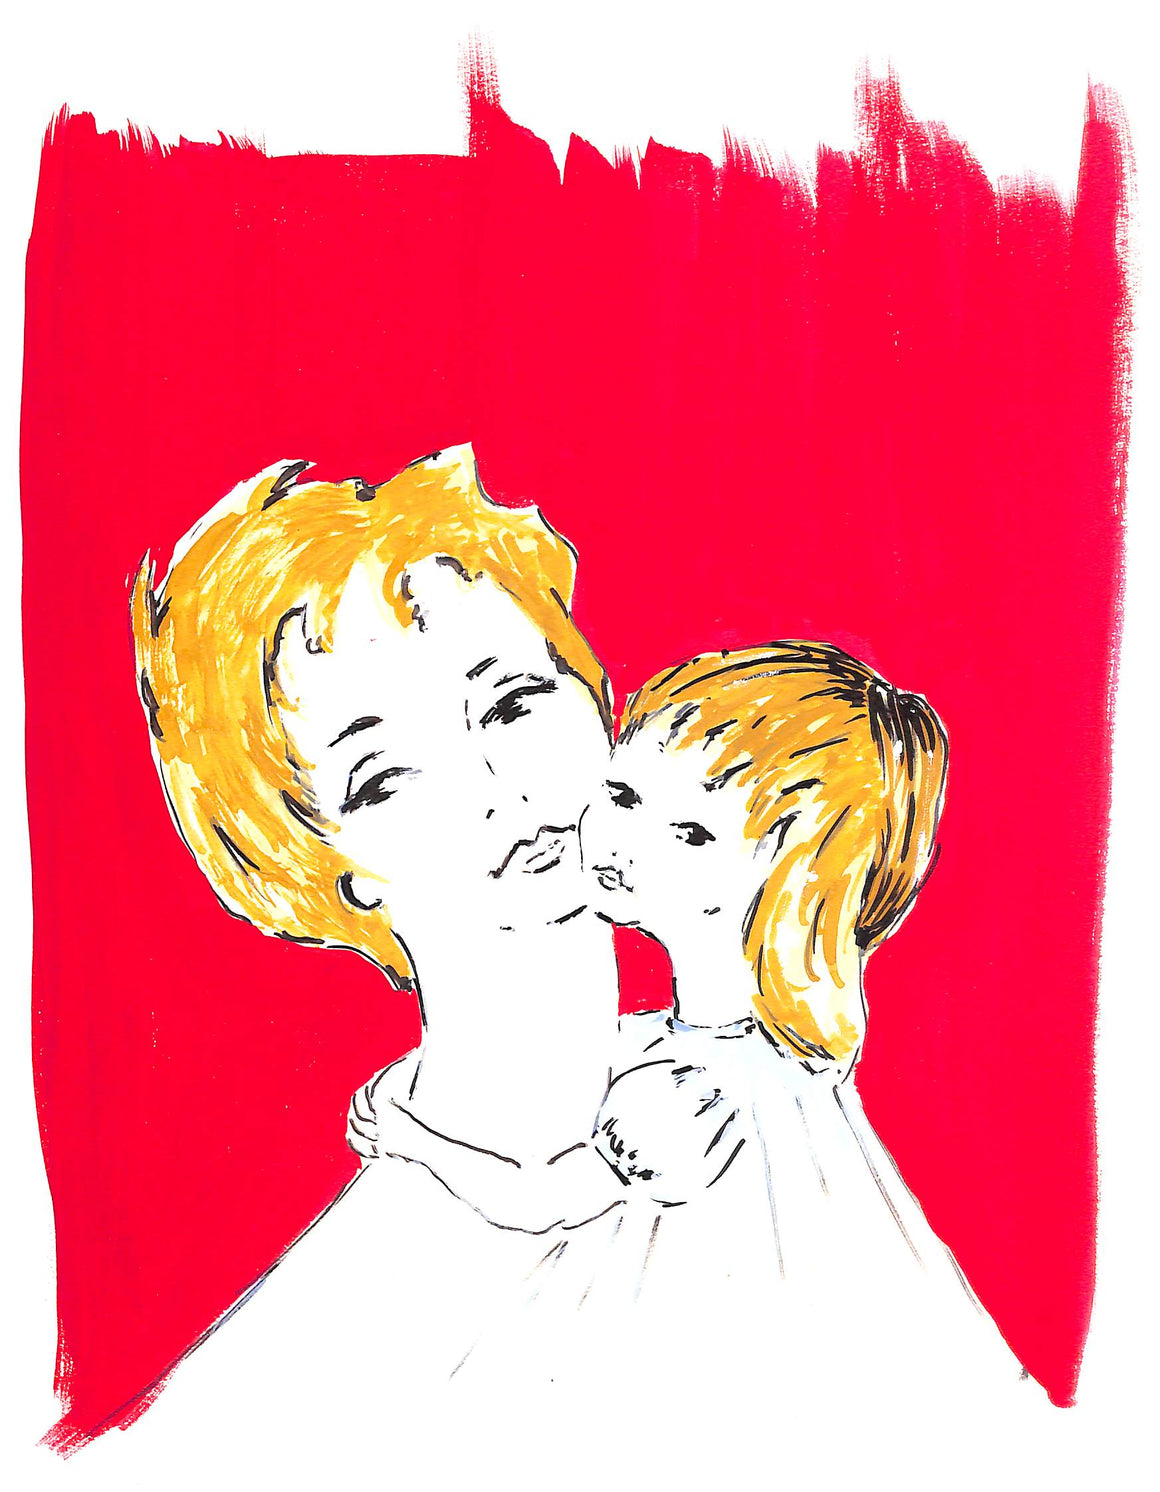 Lanvin Paris Mother & Daughter c1950's Artwork